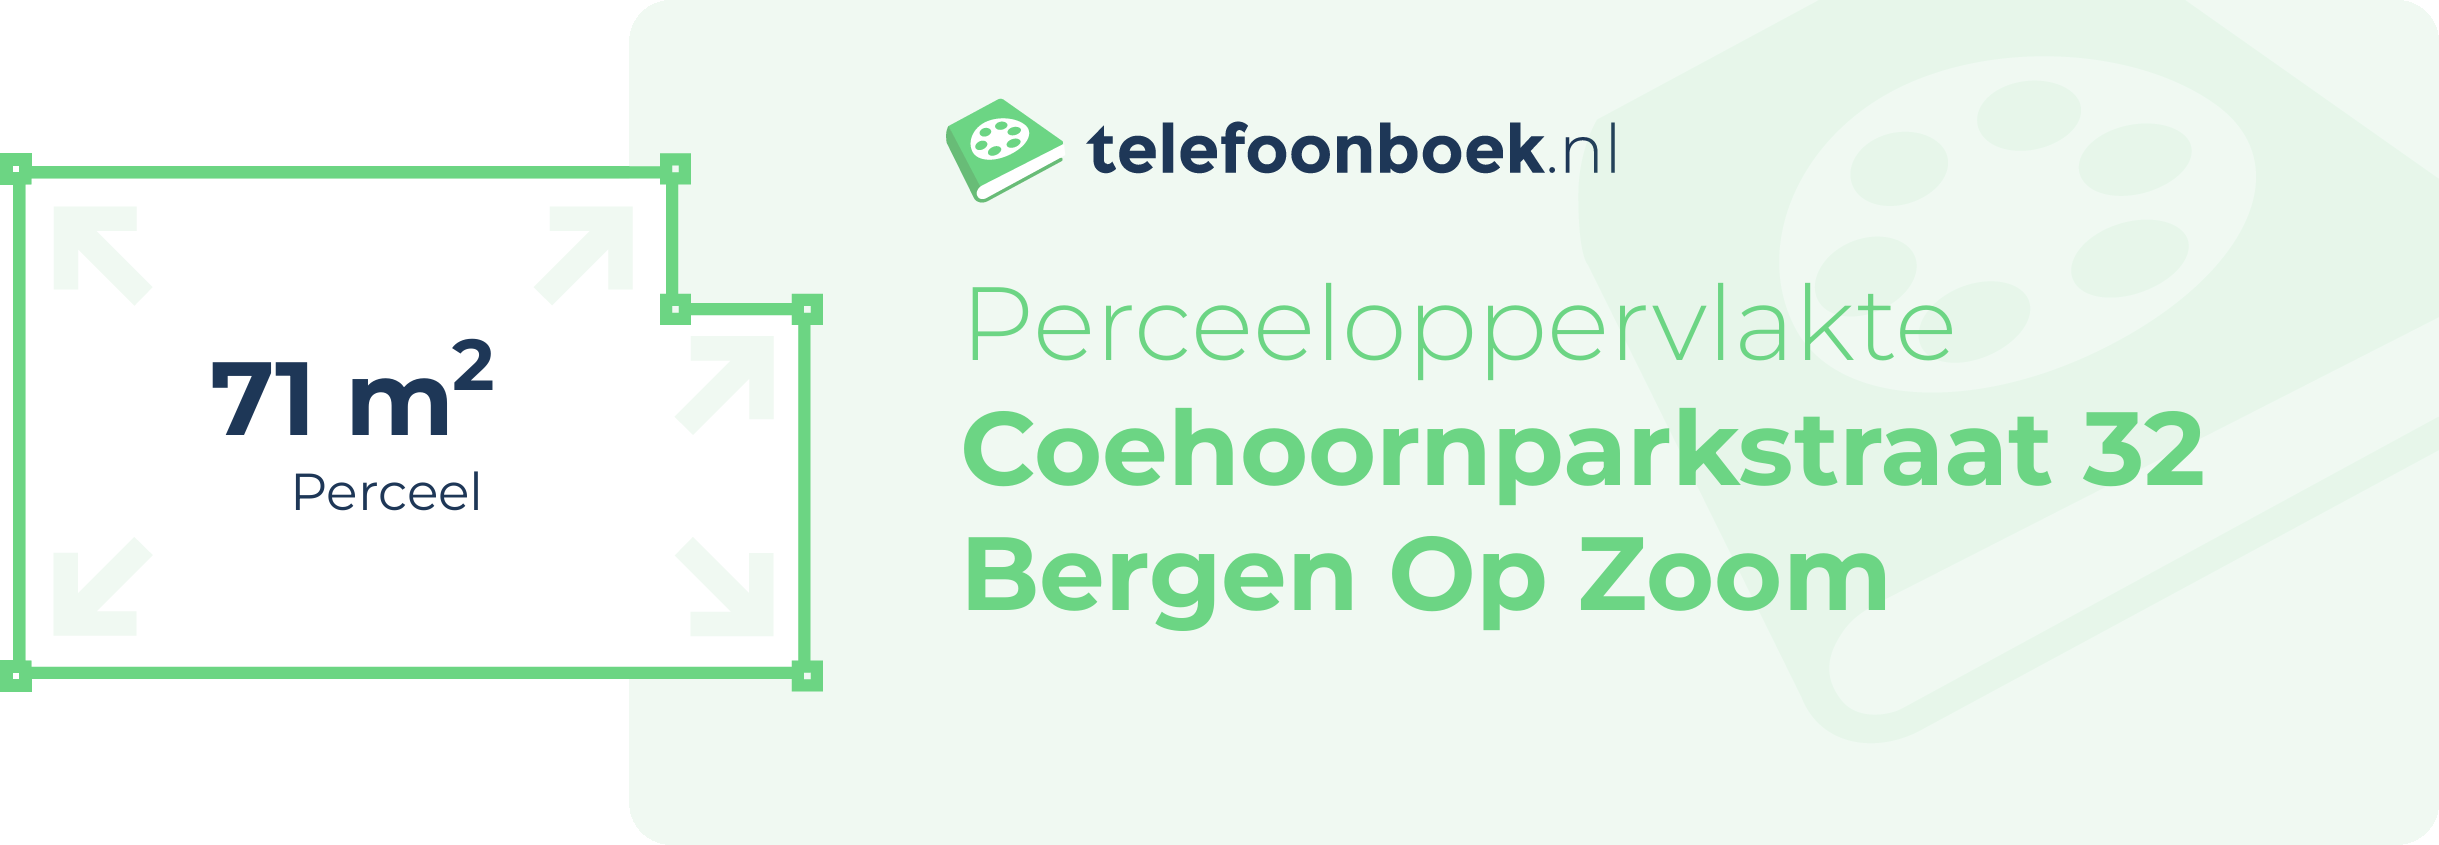 Perceeloppervlakte Coehoornparkstraat 32 Bergen Op Zoom